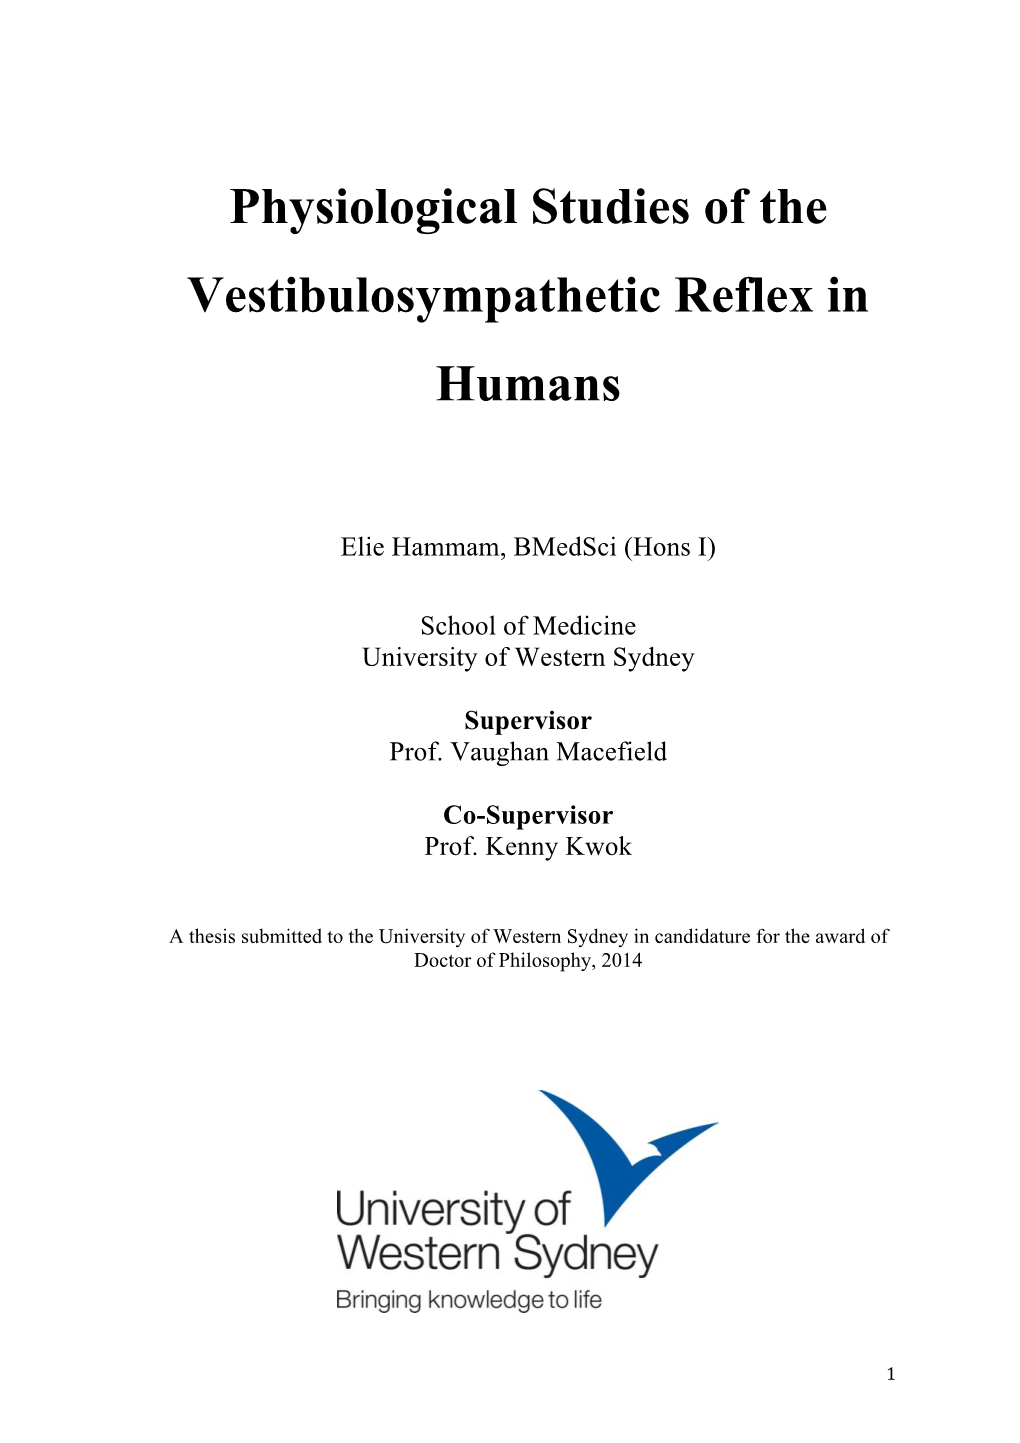 Physiological Studies of the Vestibulosympathetic Reflex in Humans